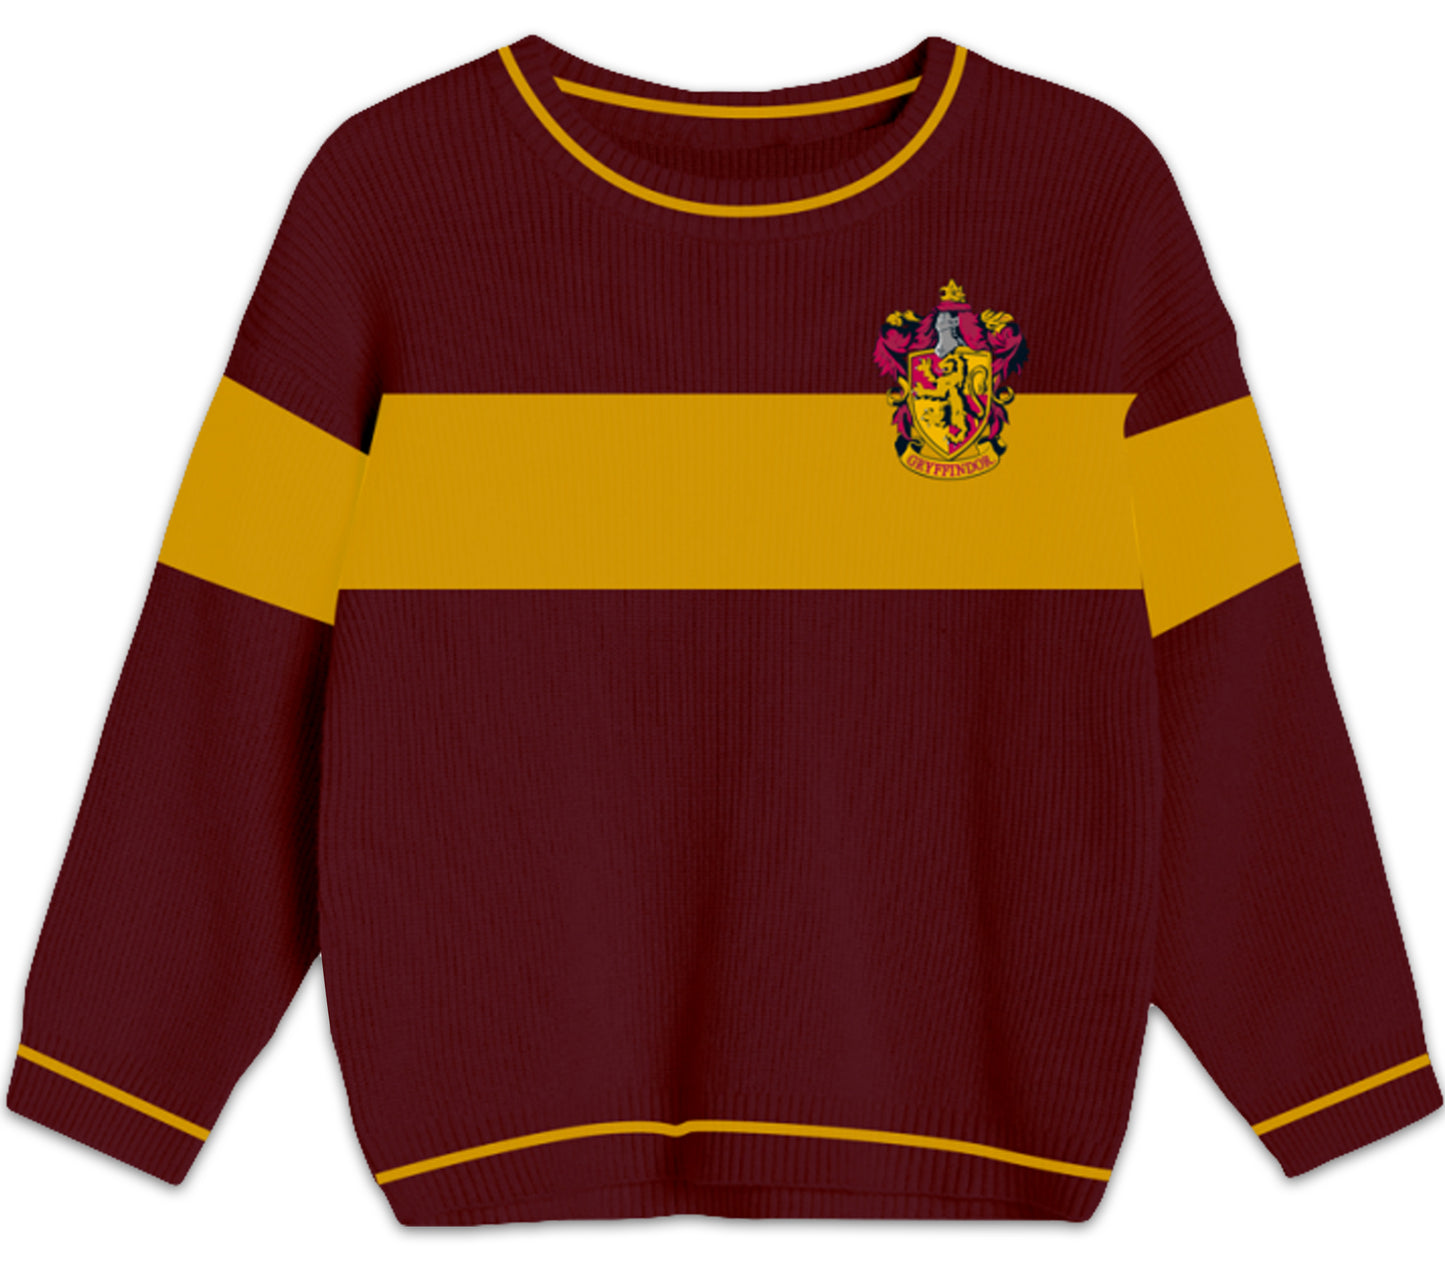 Authentic Harry Potter Gryffindor Kids Acrylic Sweatshirts